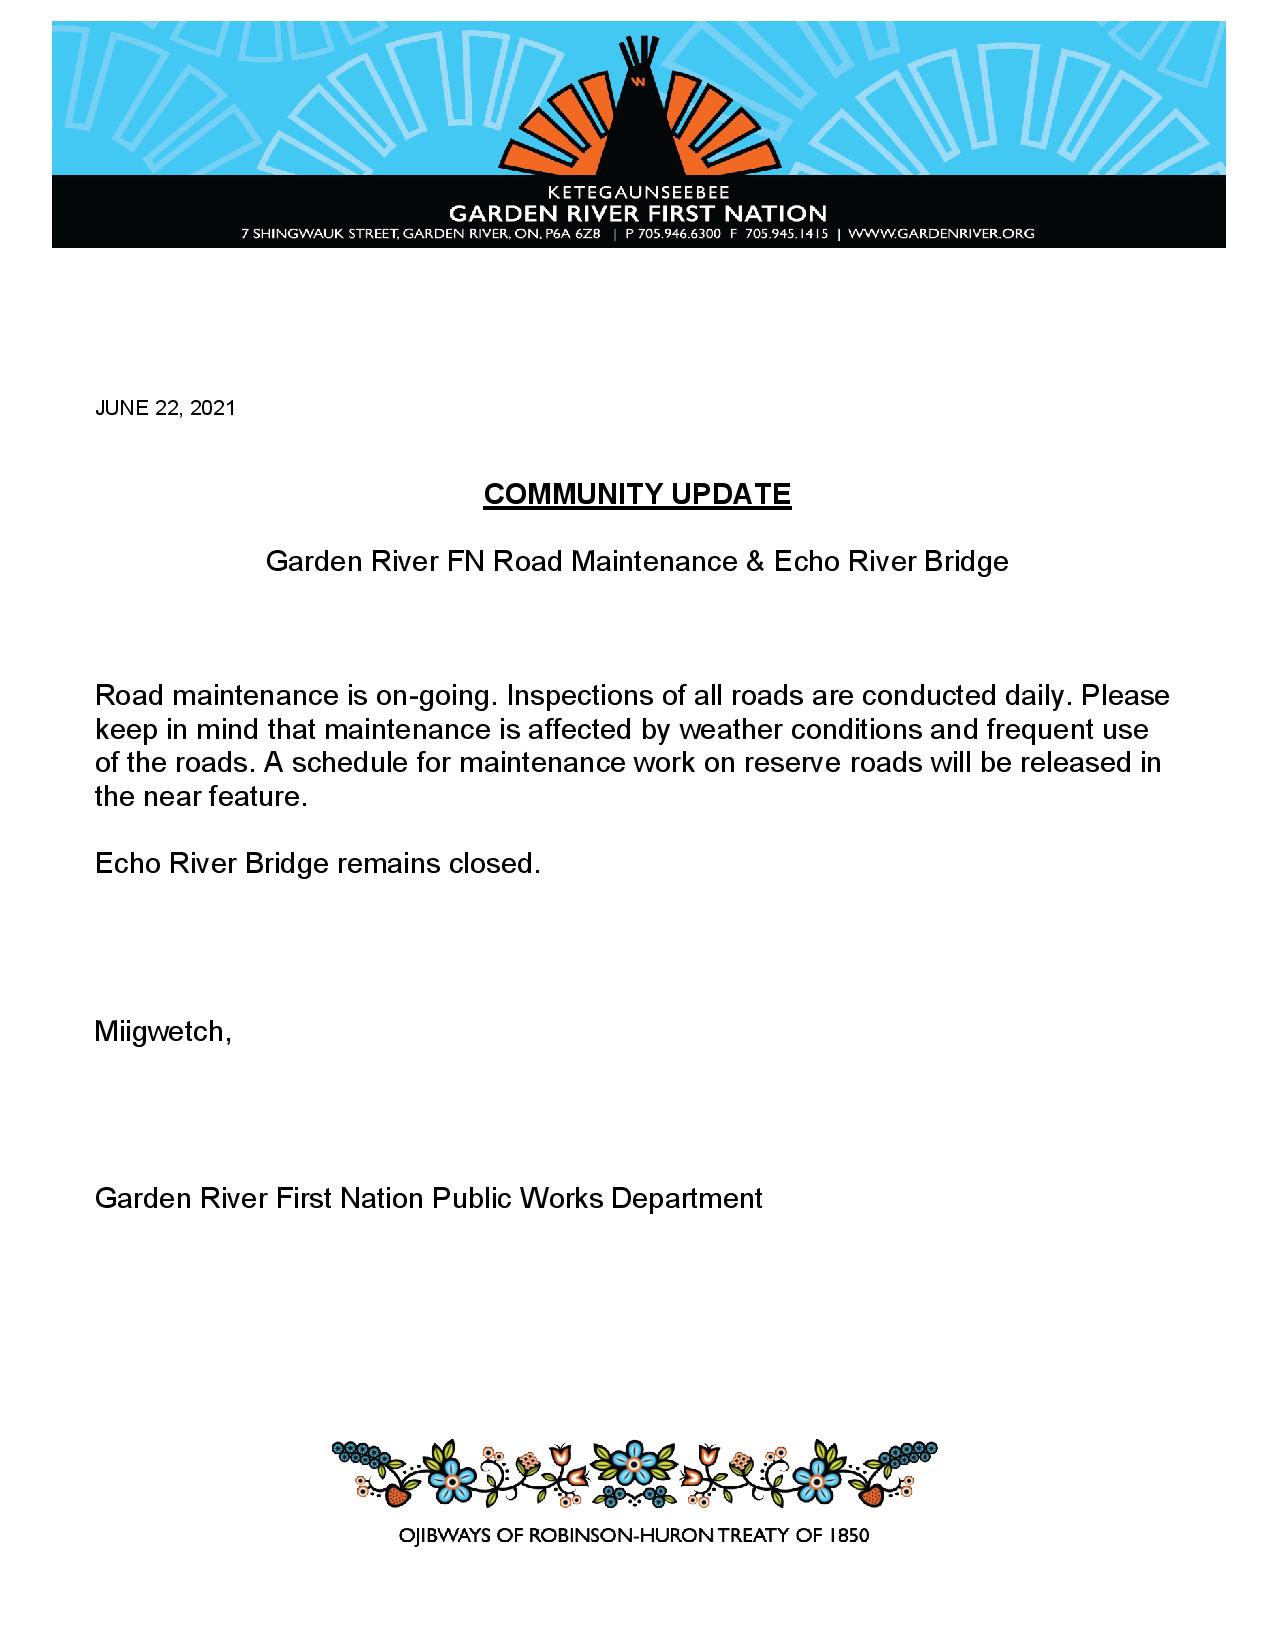 GRFN Community Notice: On-Going Road Maintenance & Echo River Bridge Continued Closure